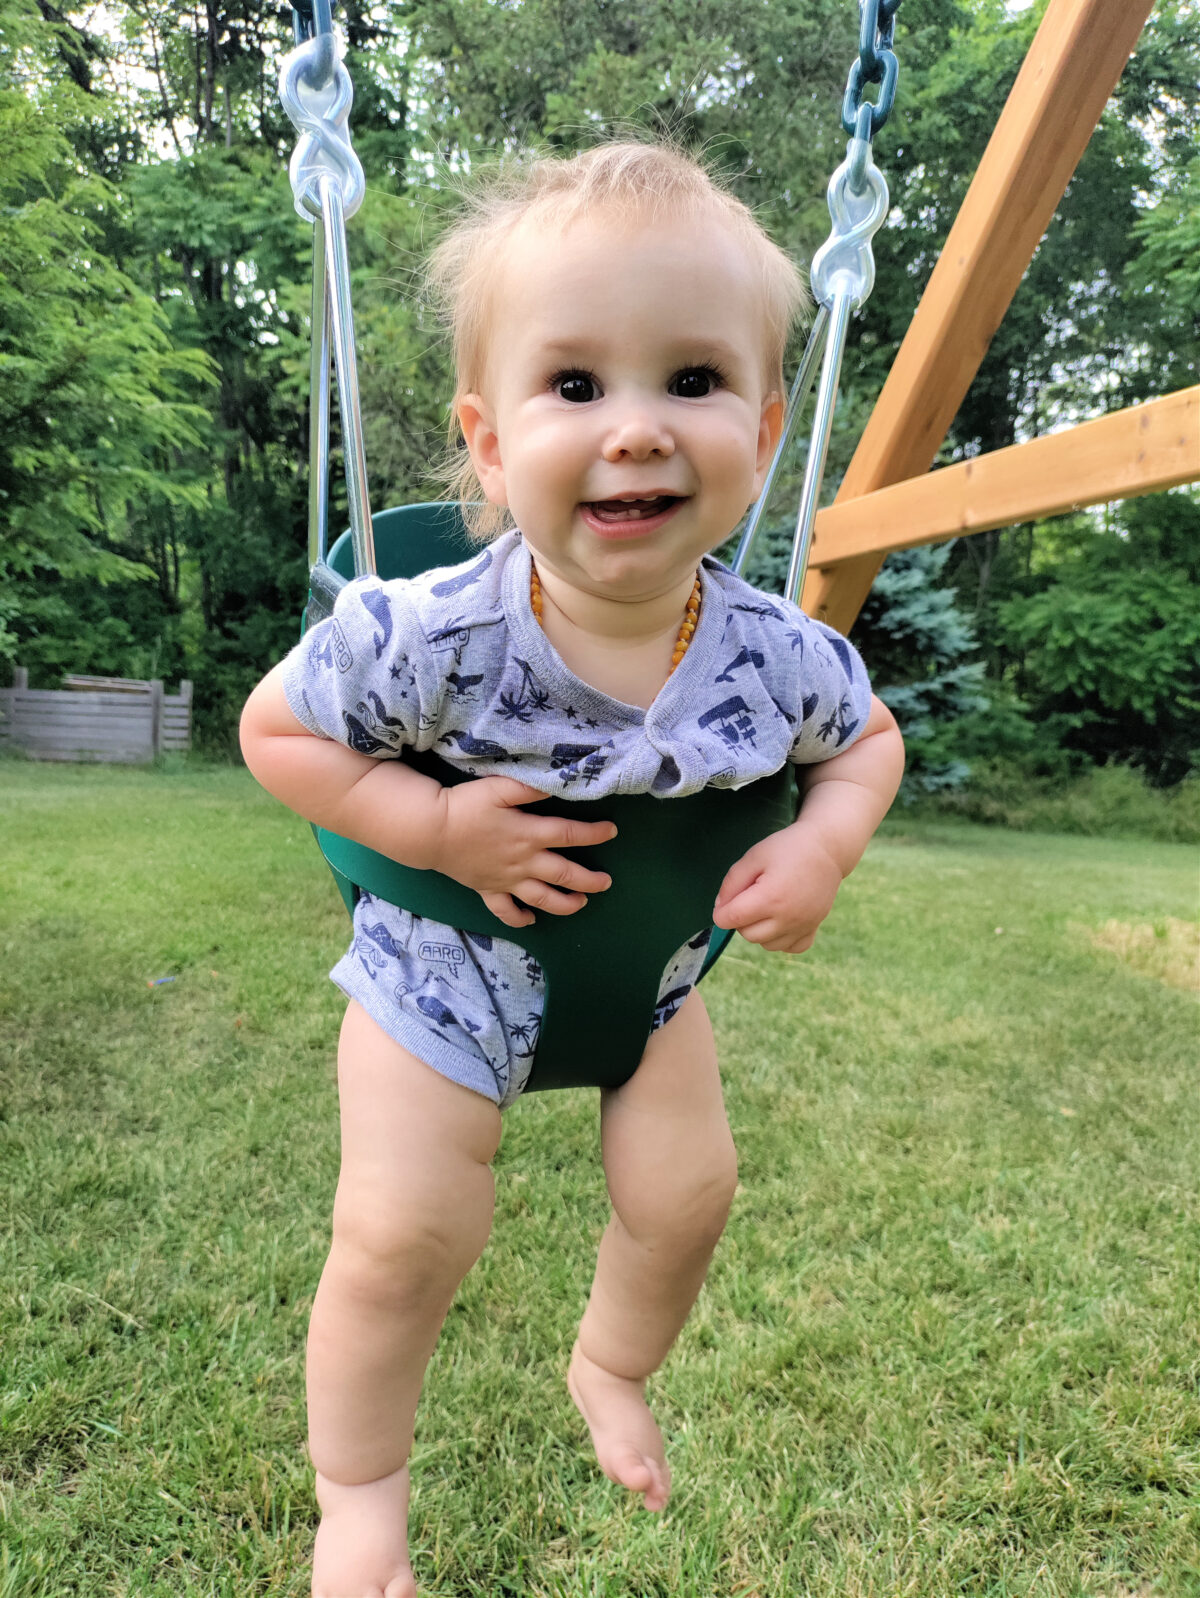 baby swinging in a backyard adventures swing
